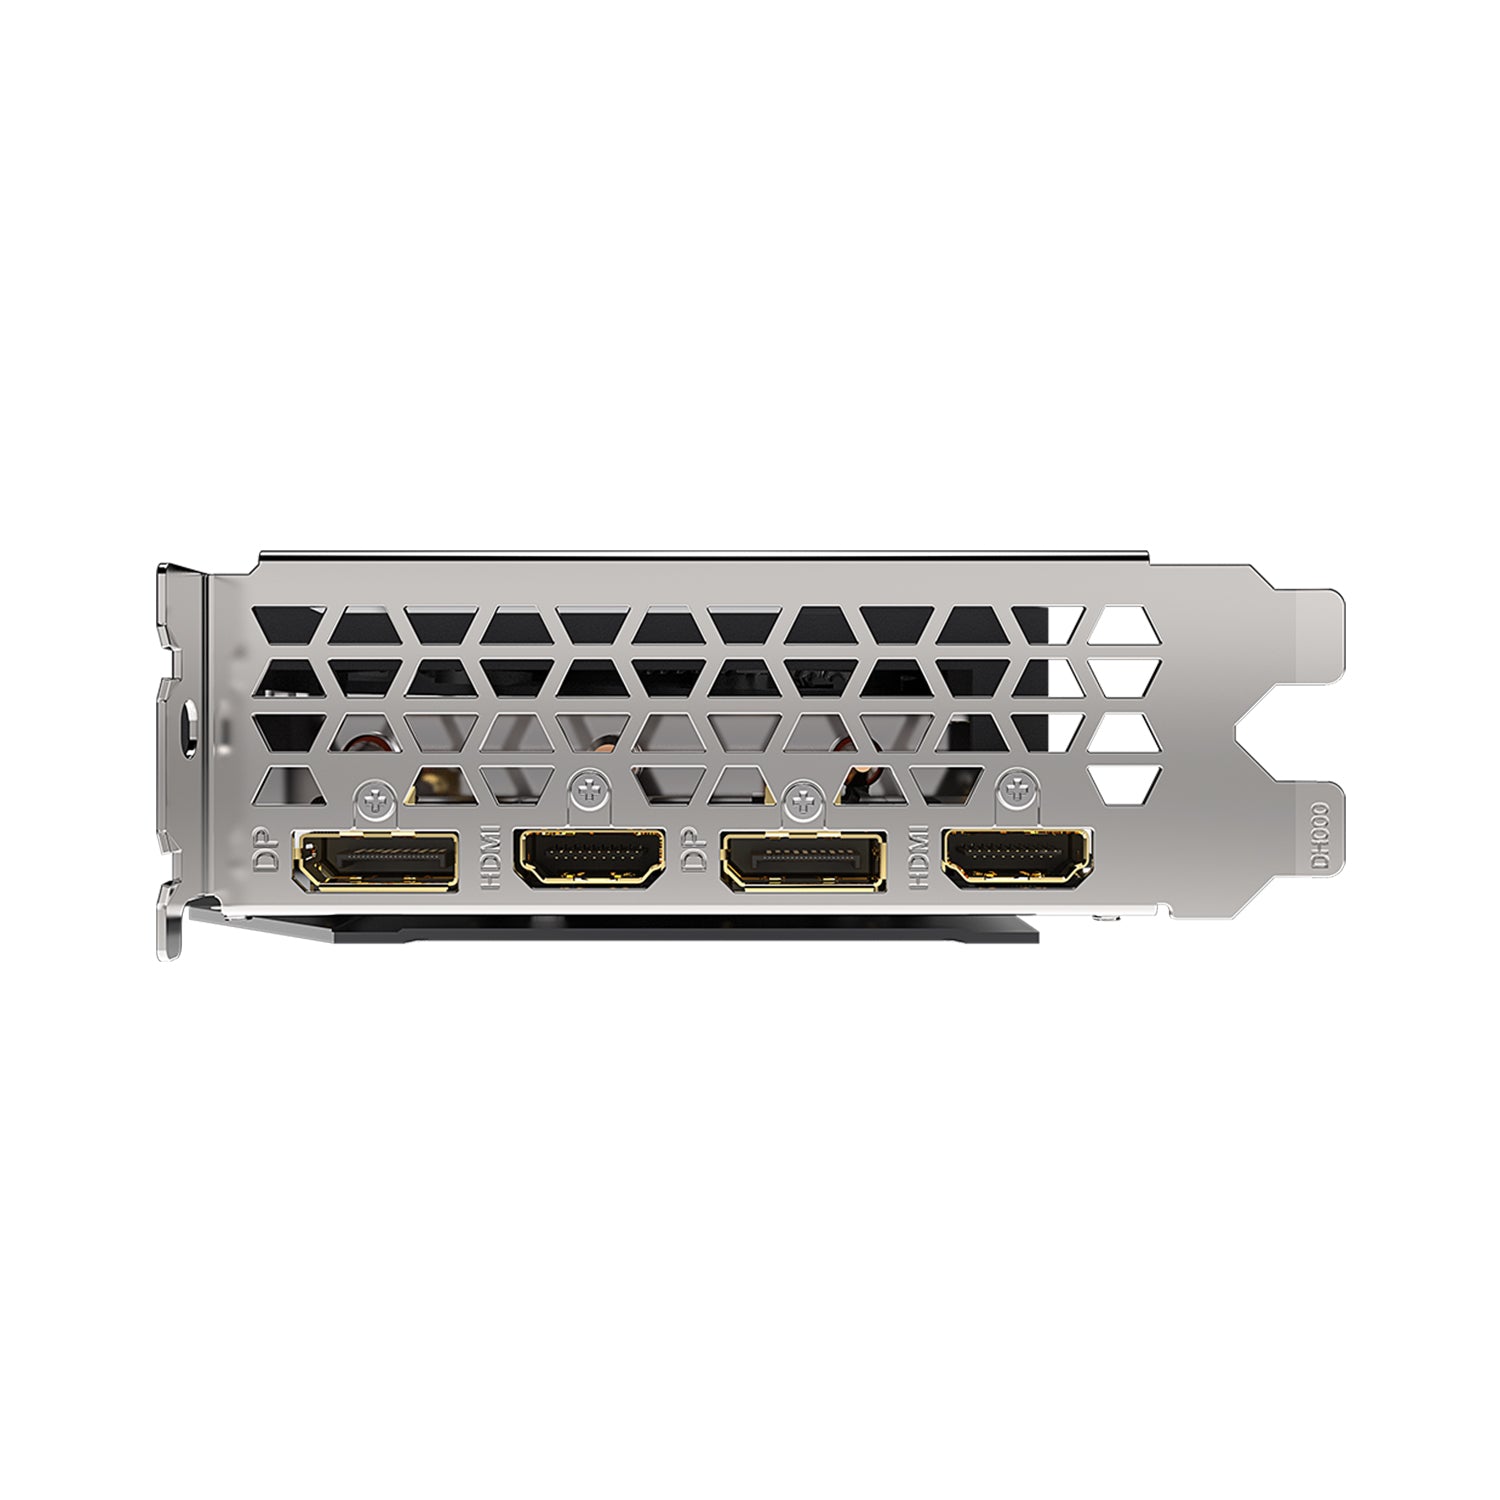 GIGABYTE GeForce RTX 3070 8GB GDDR6 Video Card - PCI Express 4.0, 2x HDMI, 2x Display port | GV-N3070EAGLE-8GD Graphics Card